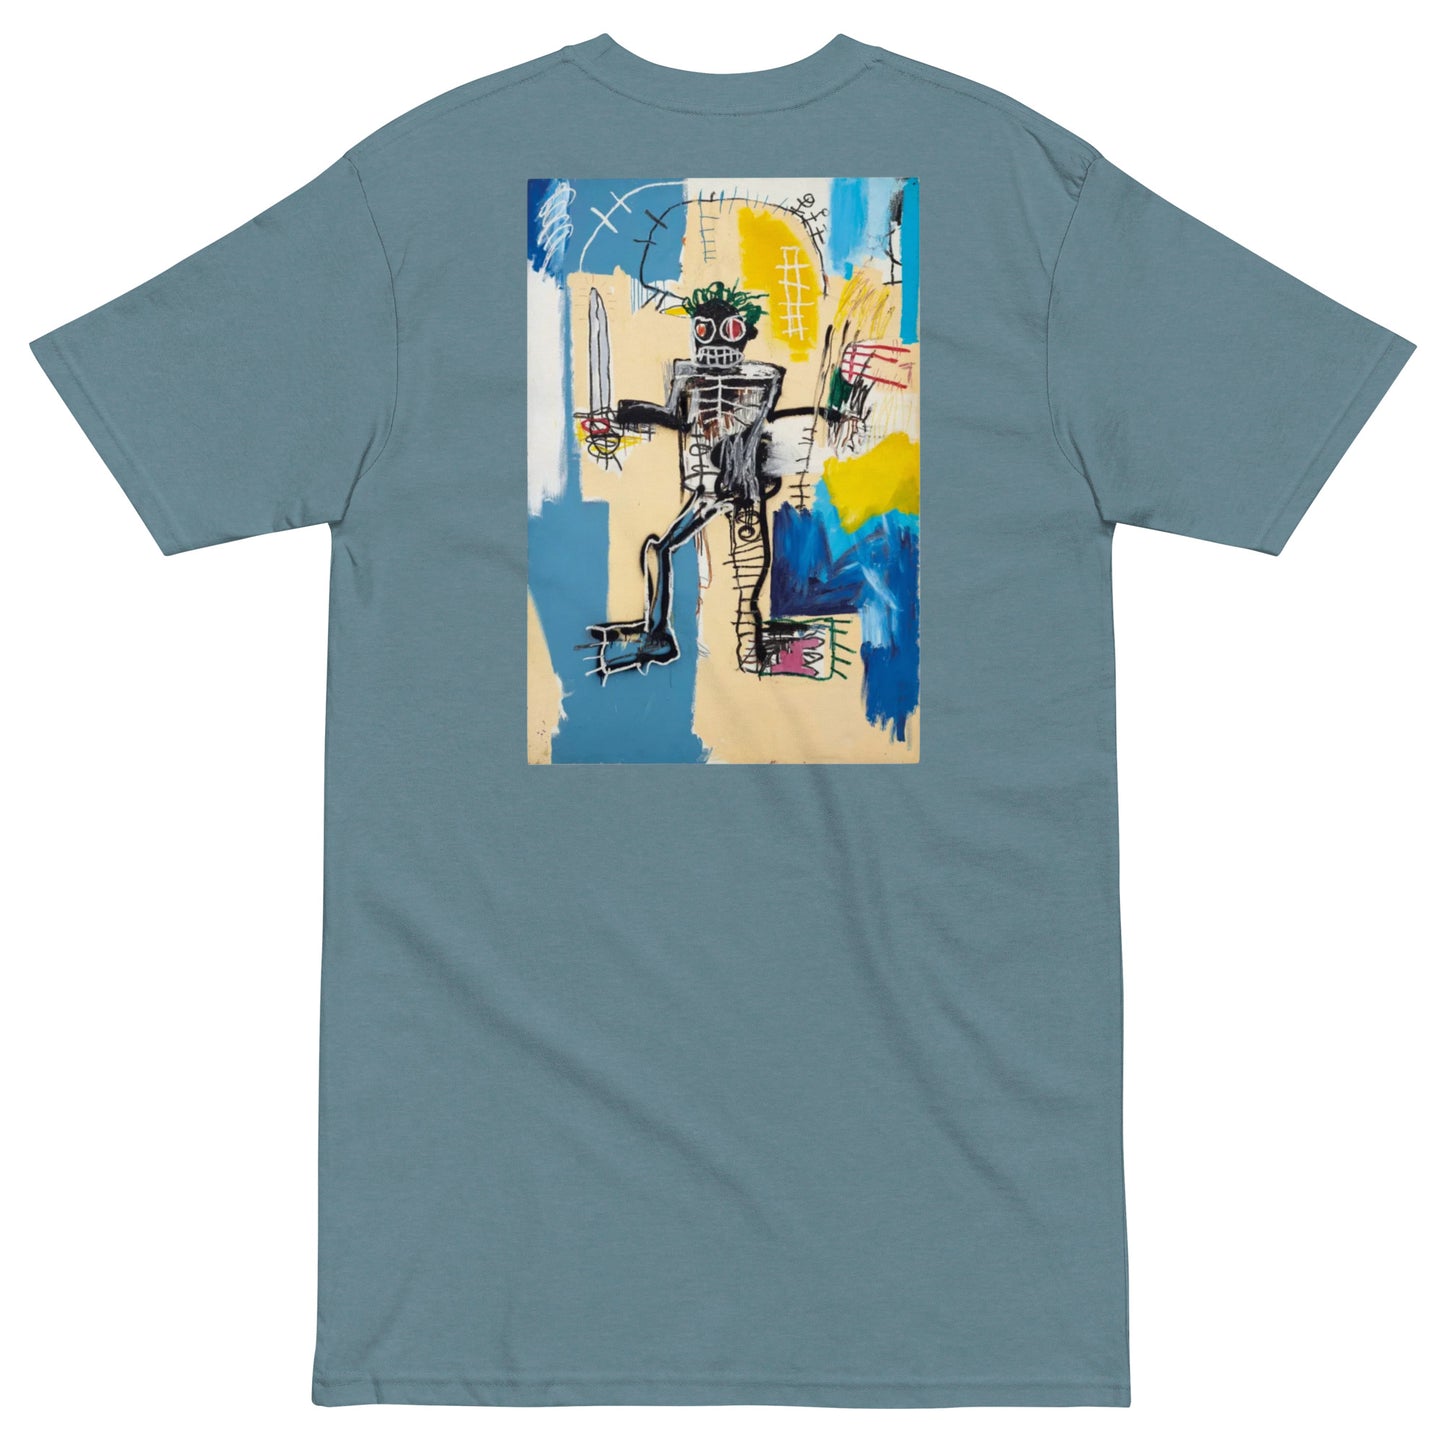 Jean-Michel Basquiat "Warrior" 1982 Artwork Embroidered + Printed Premium Streetwear T-shirt Blue Agave